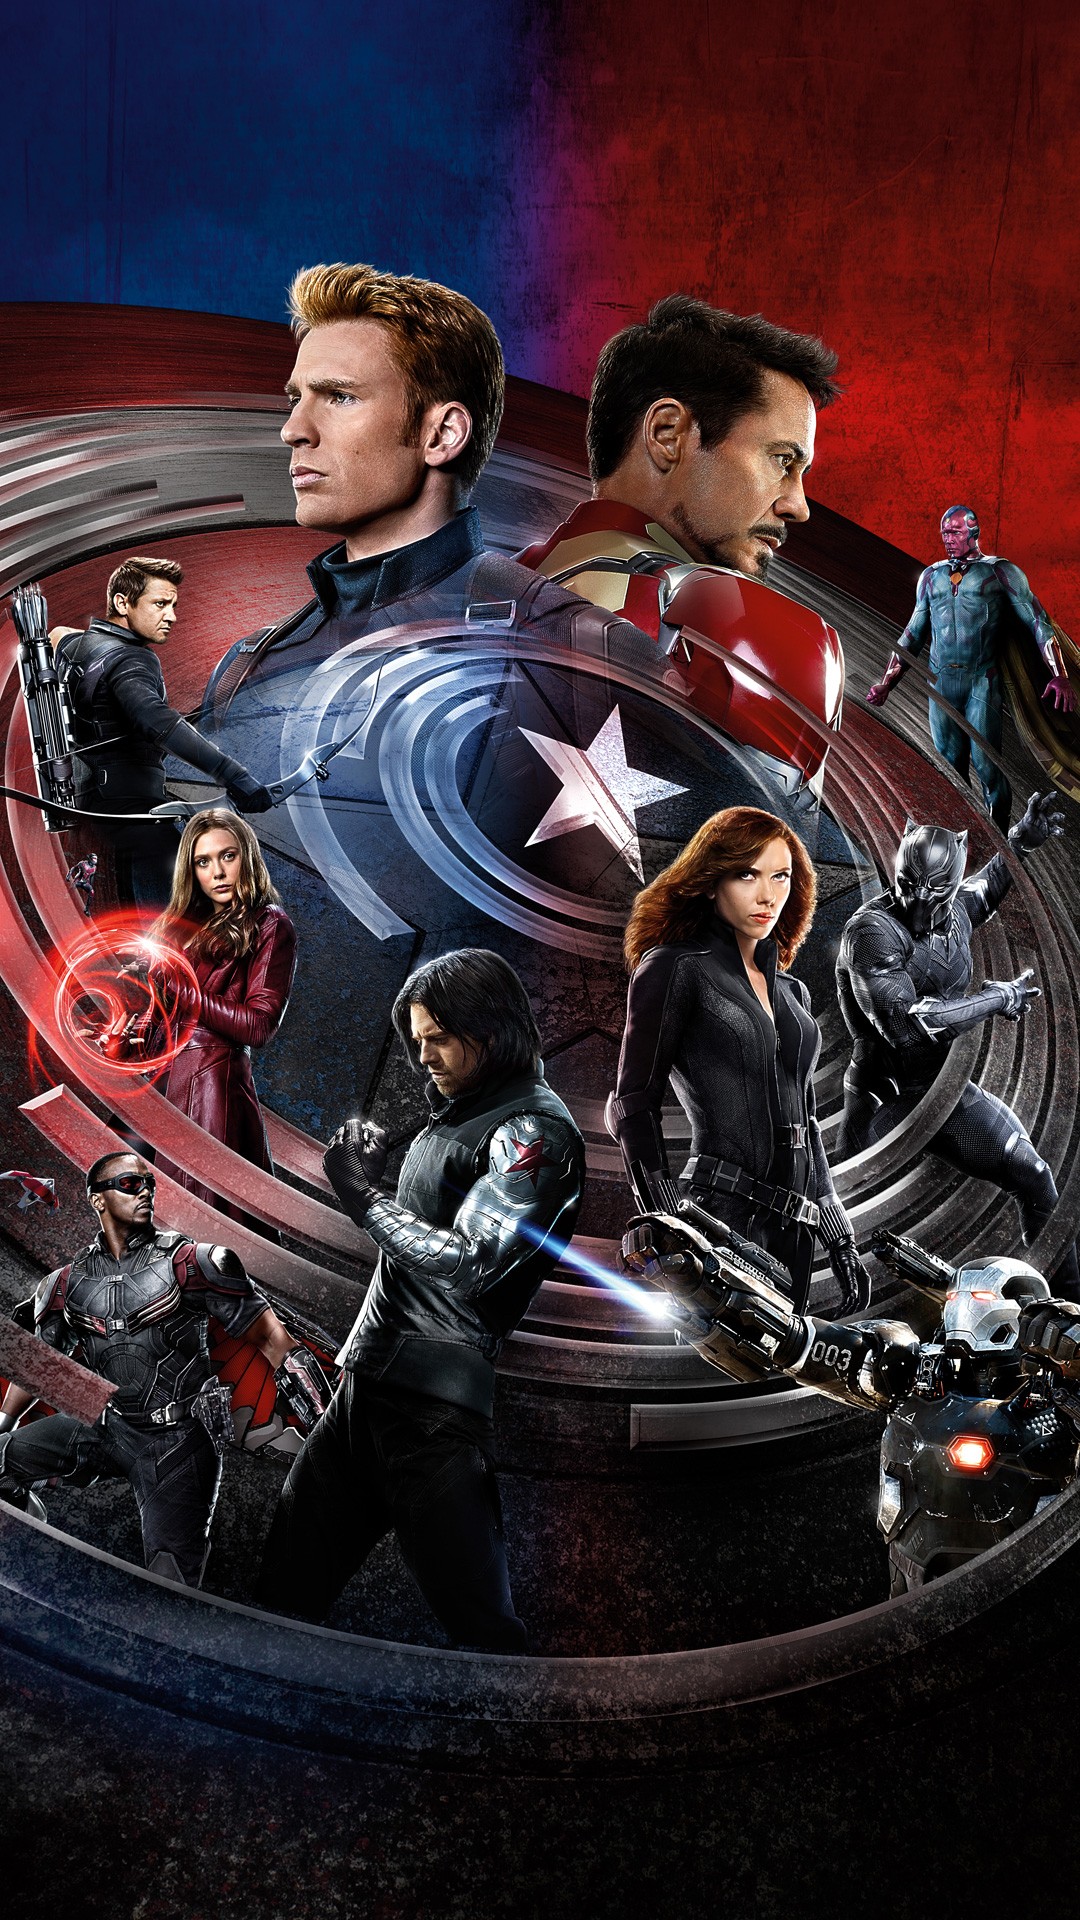 civil war wallpaper,movie,fictional character,hero,superhero,action film